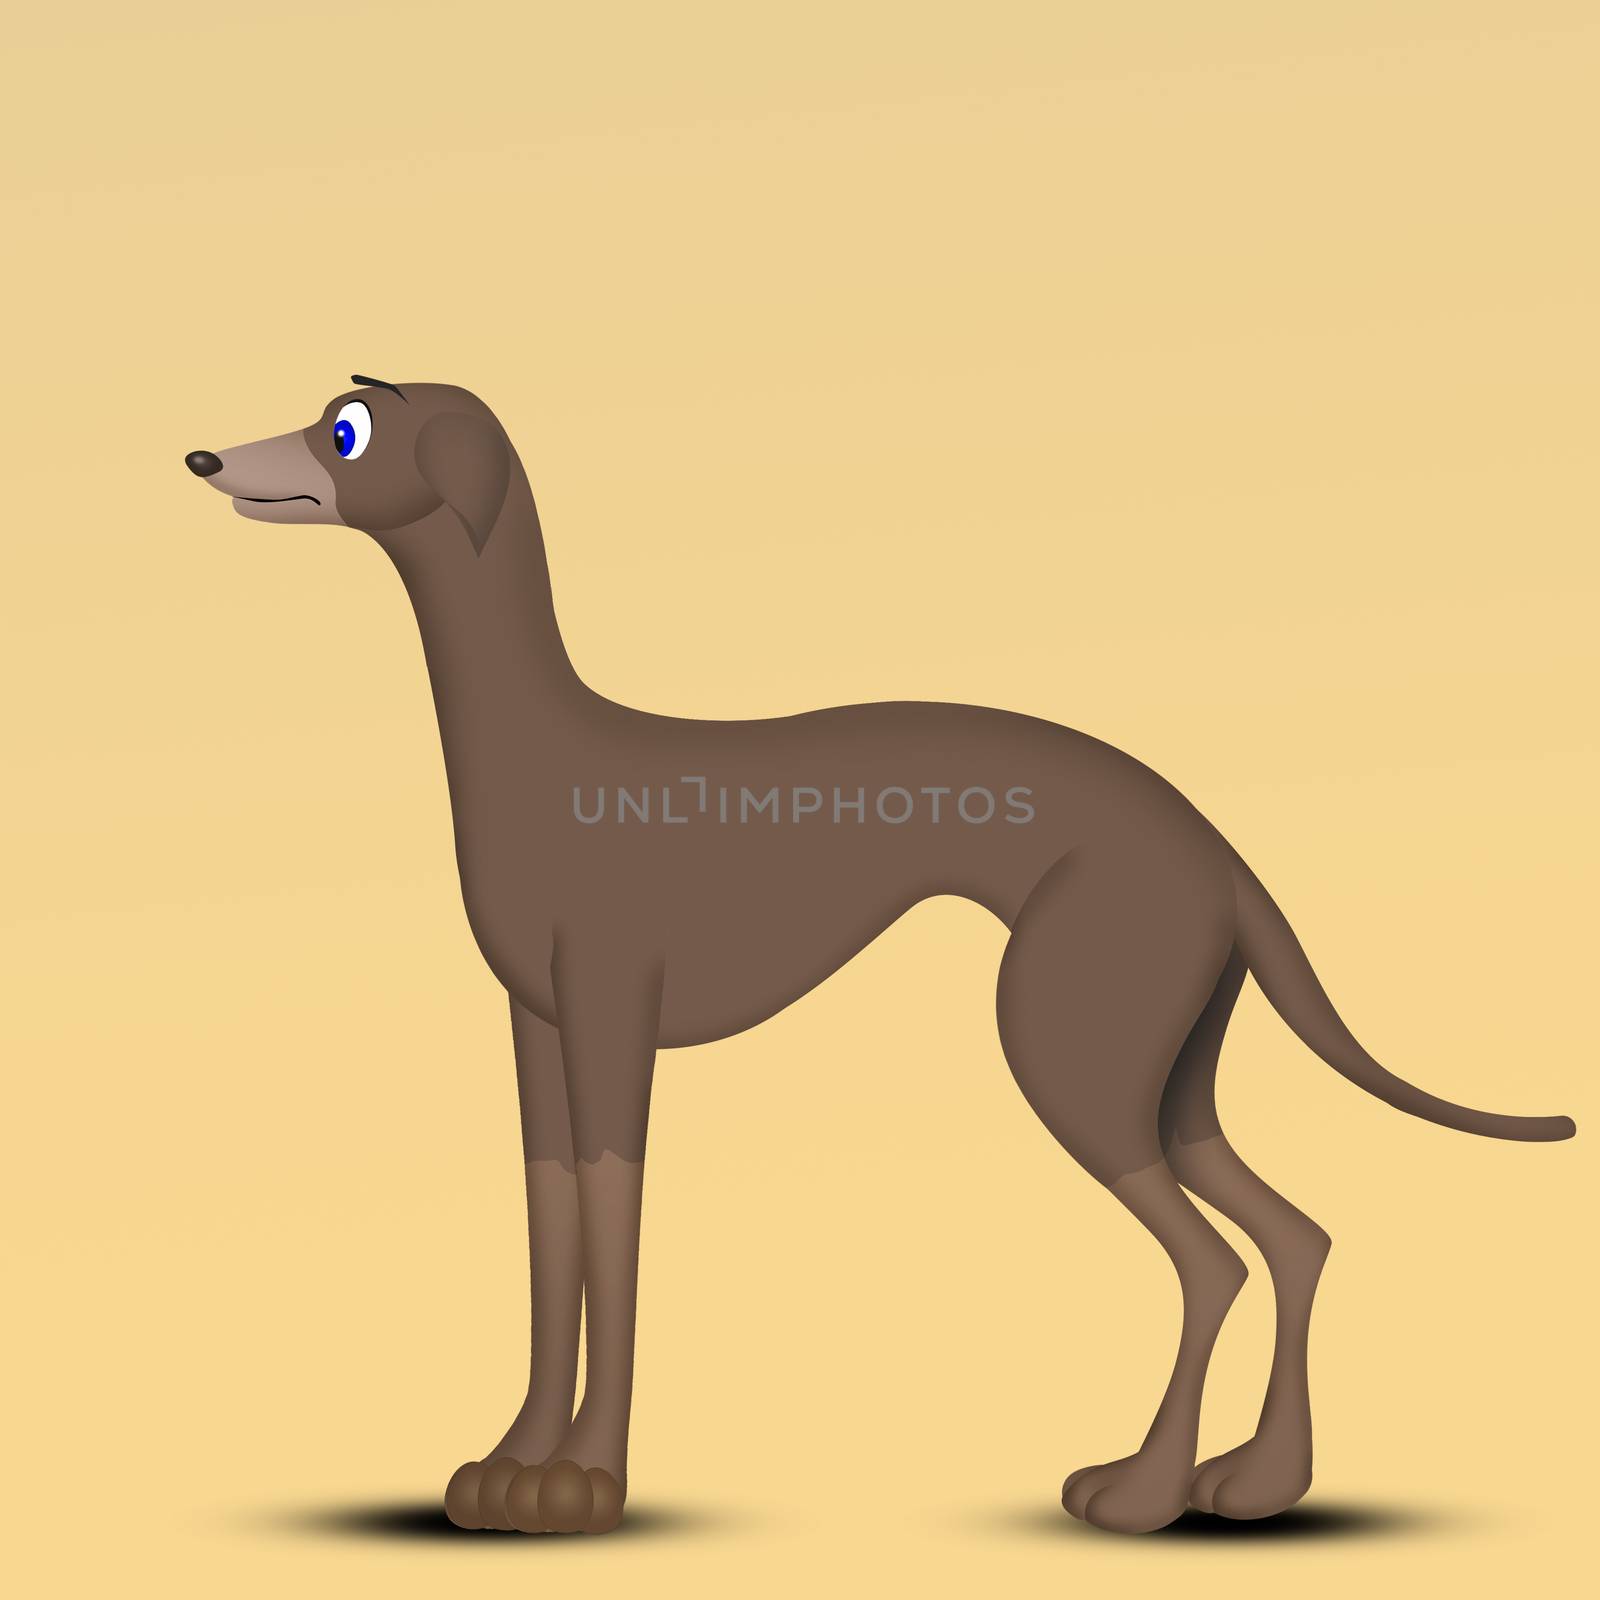 illustration of greyhound dog